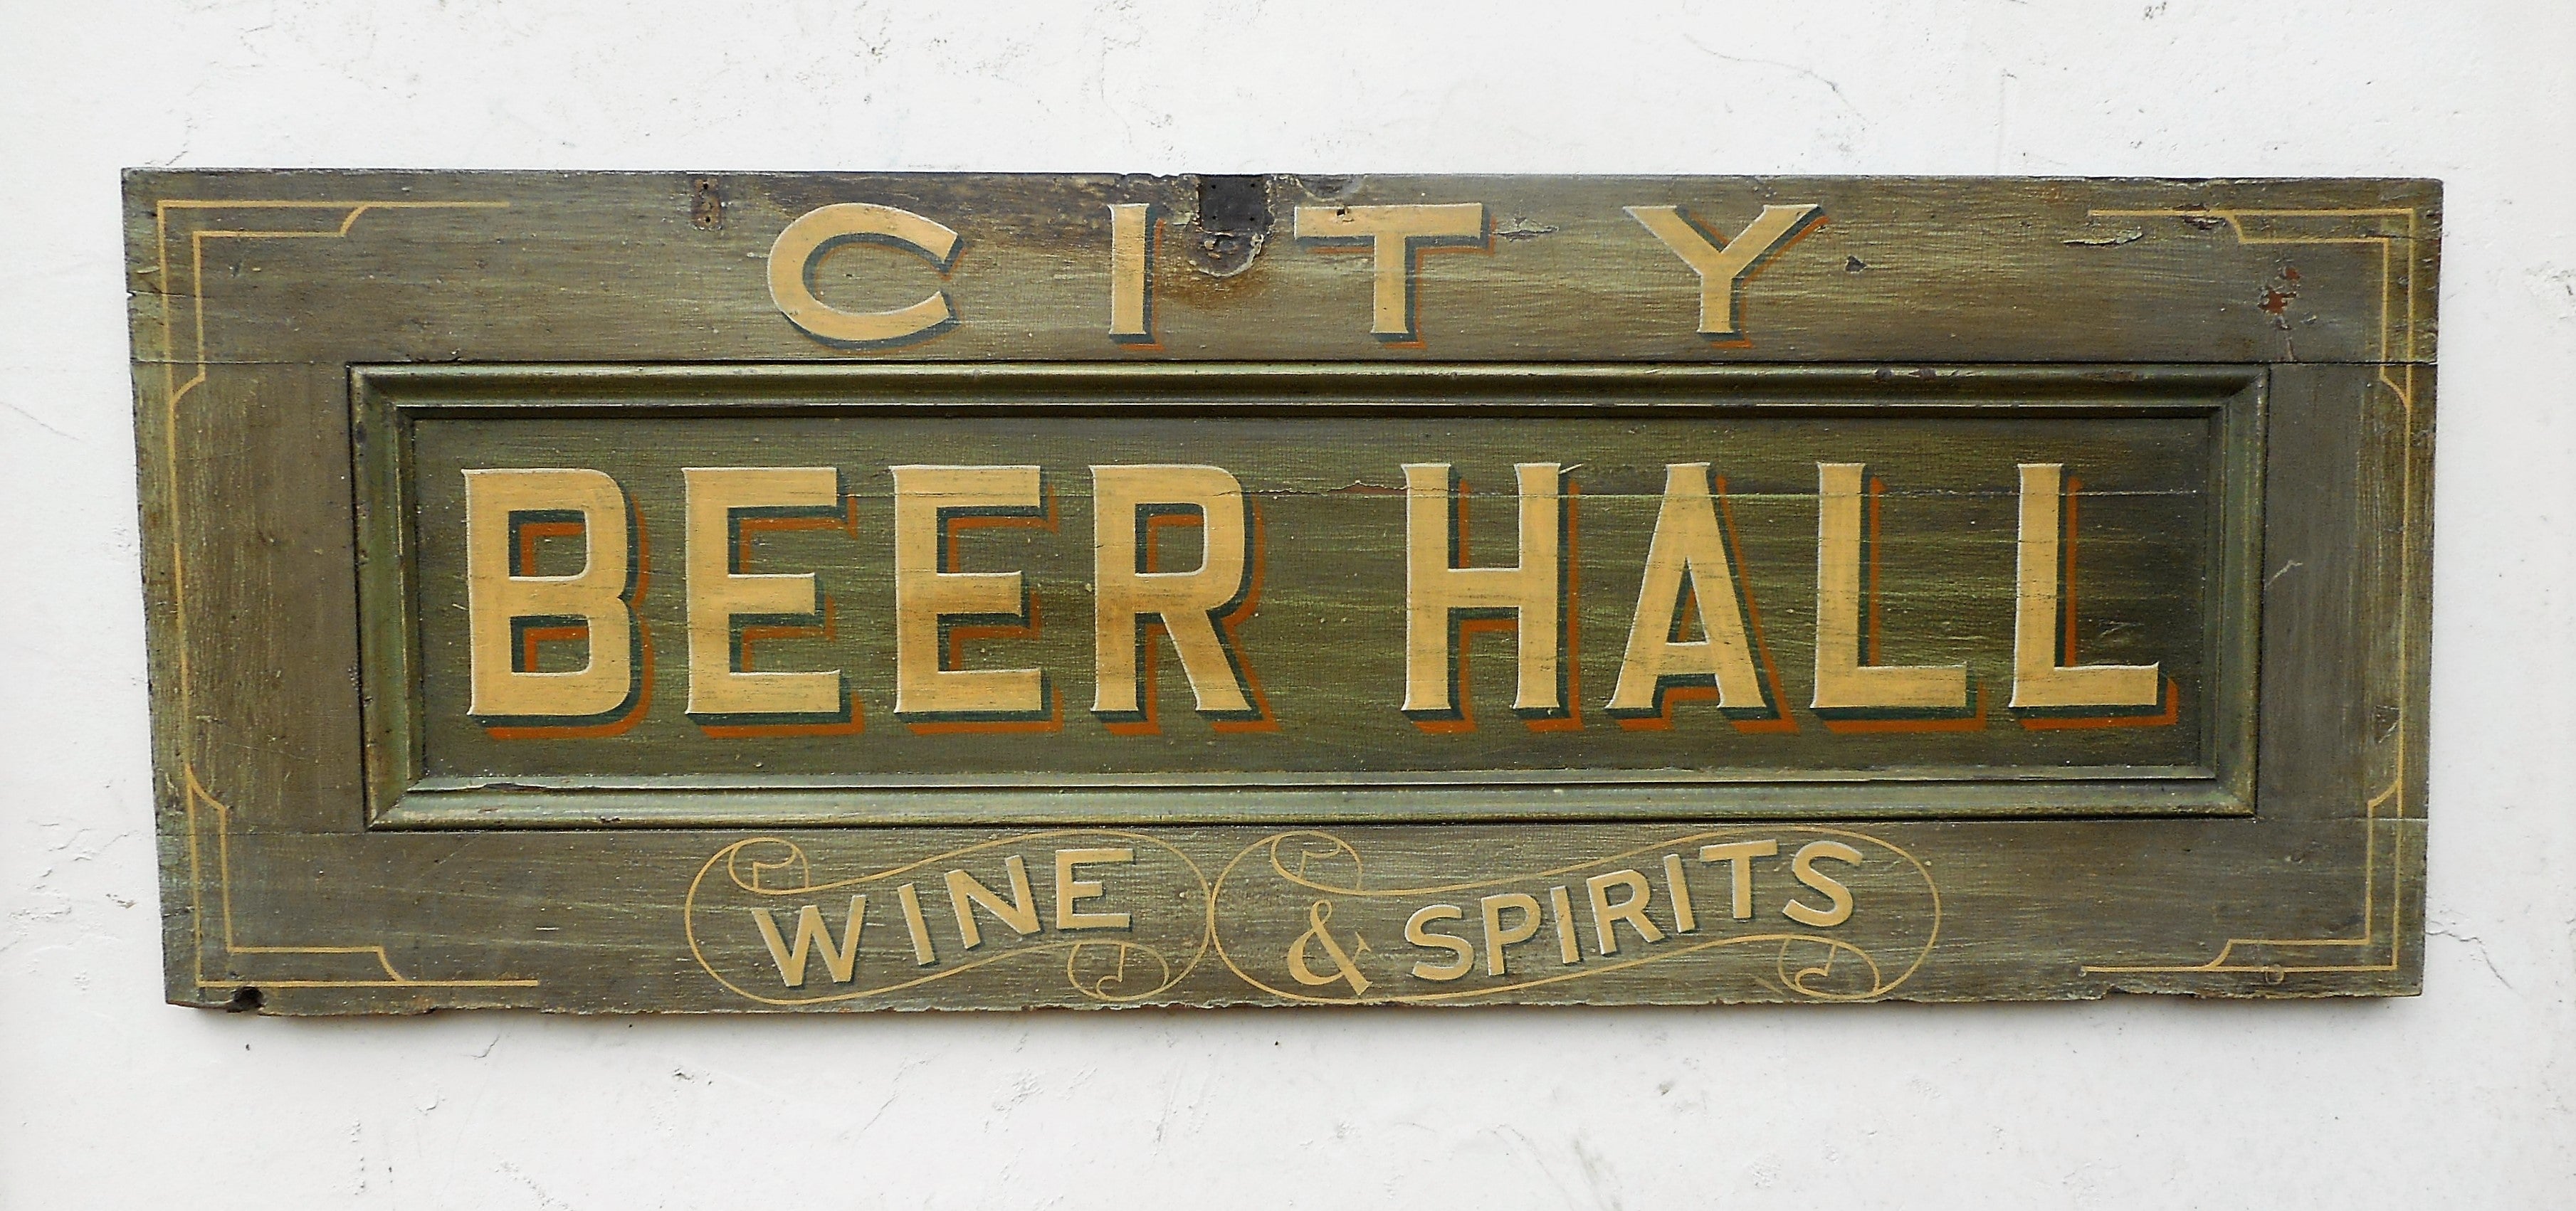 City Beer Hall